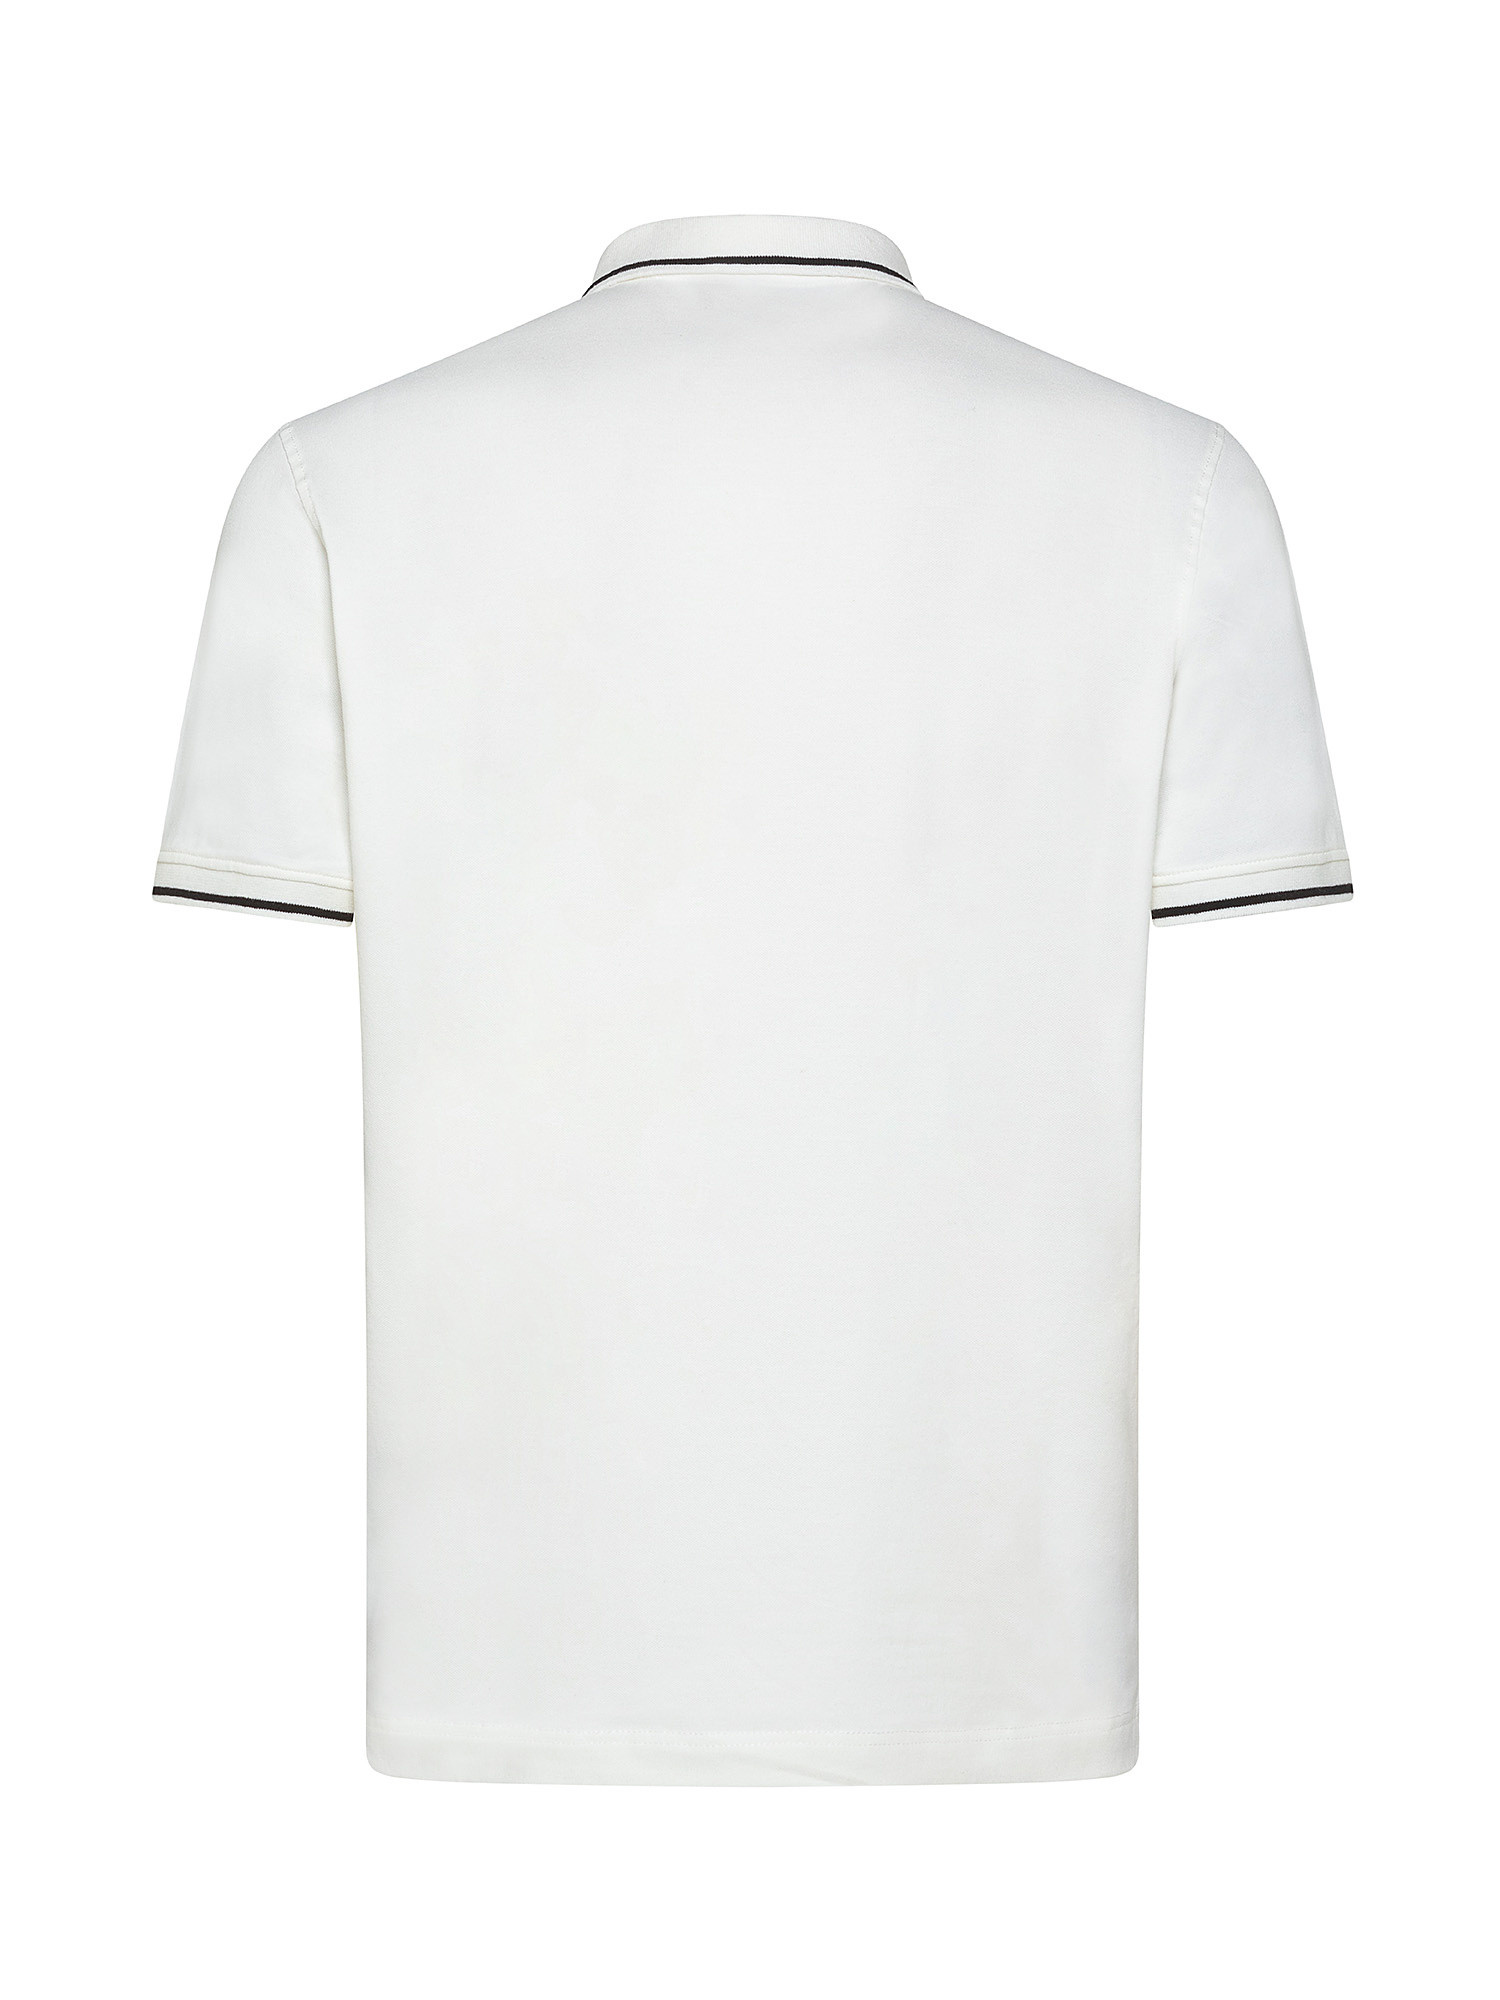 Polo shirt, White, large image number 1